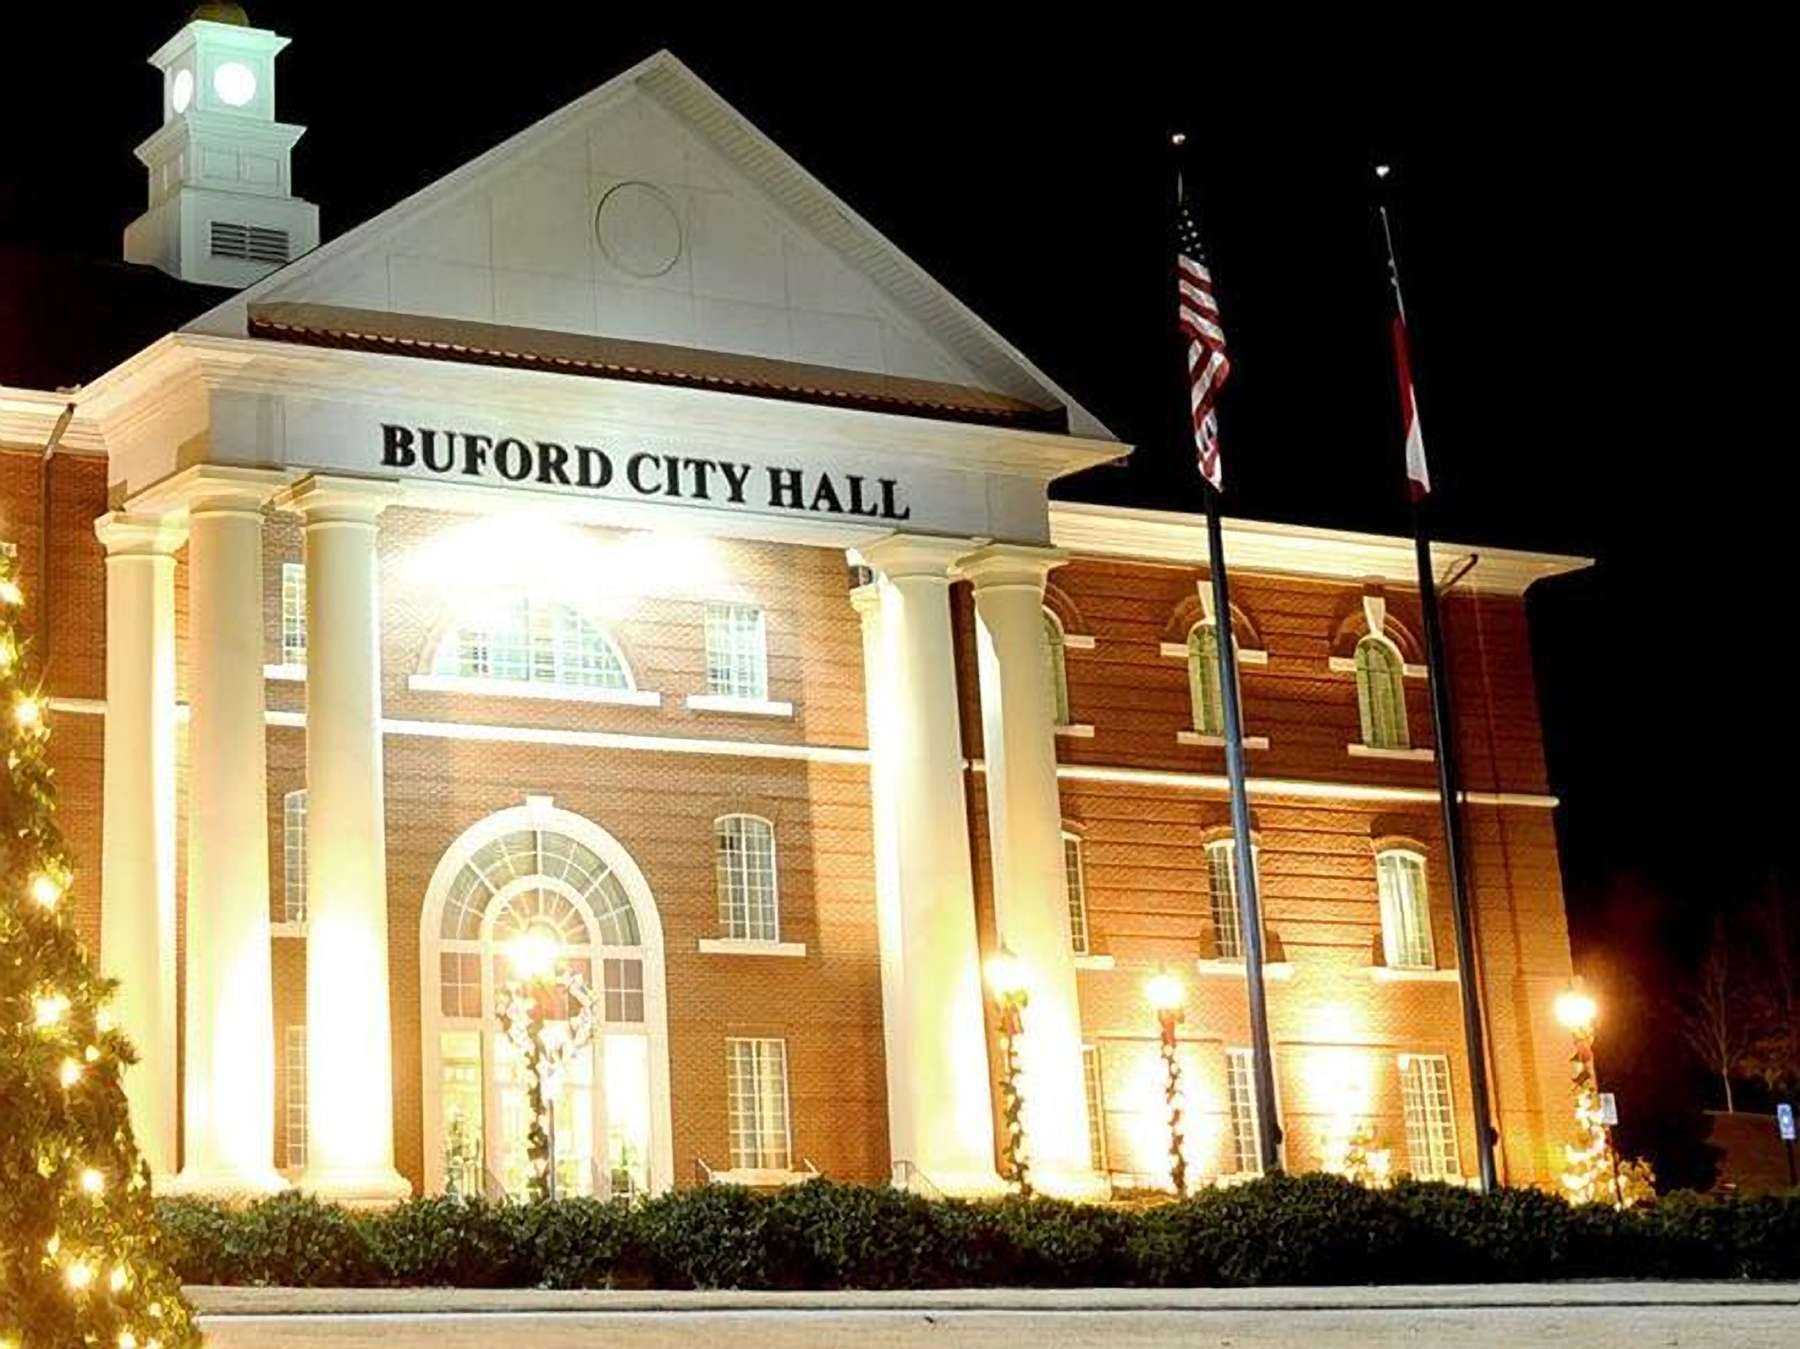 Buford City Hall